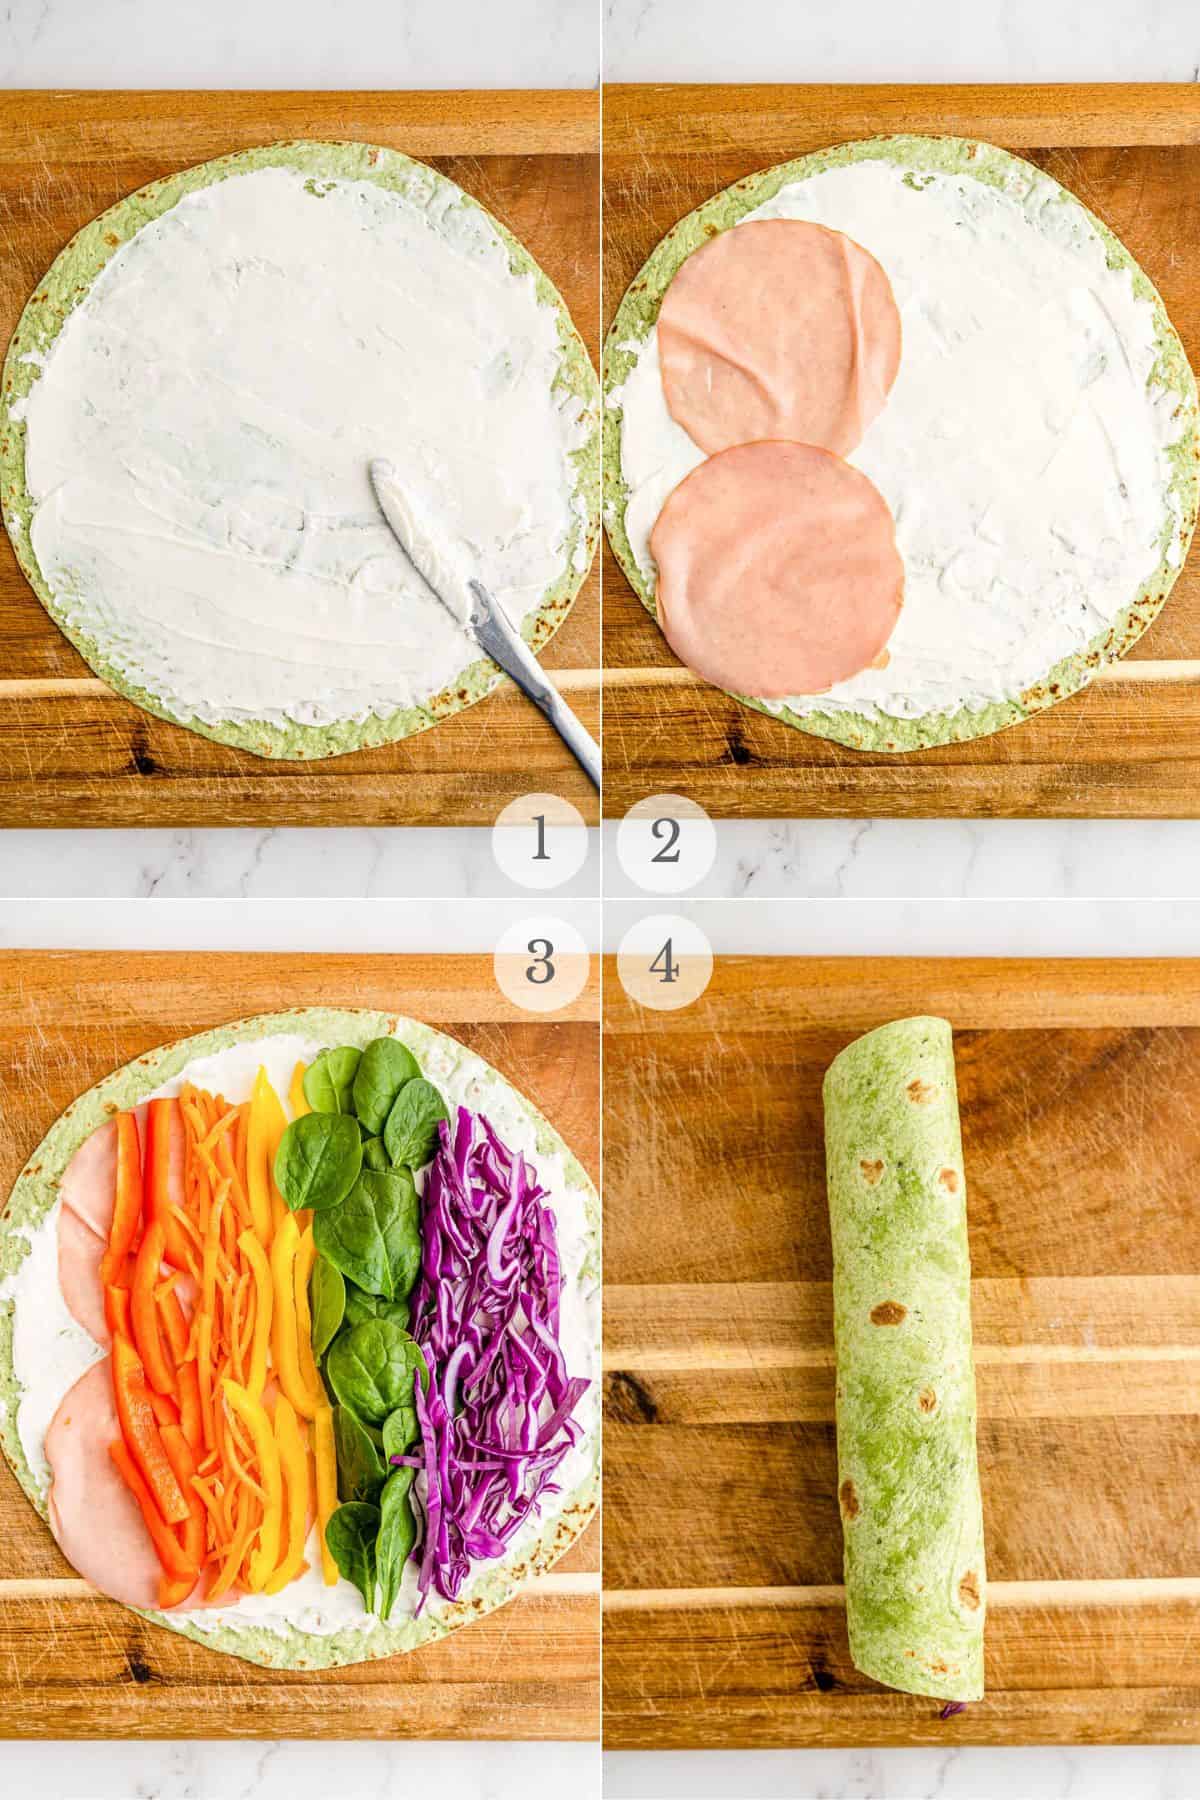 rainbow turkey roll ups recipe steps 1-4.